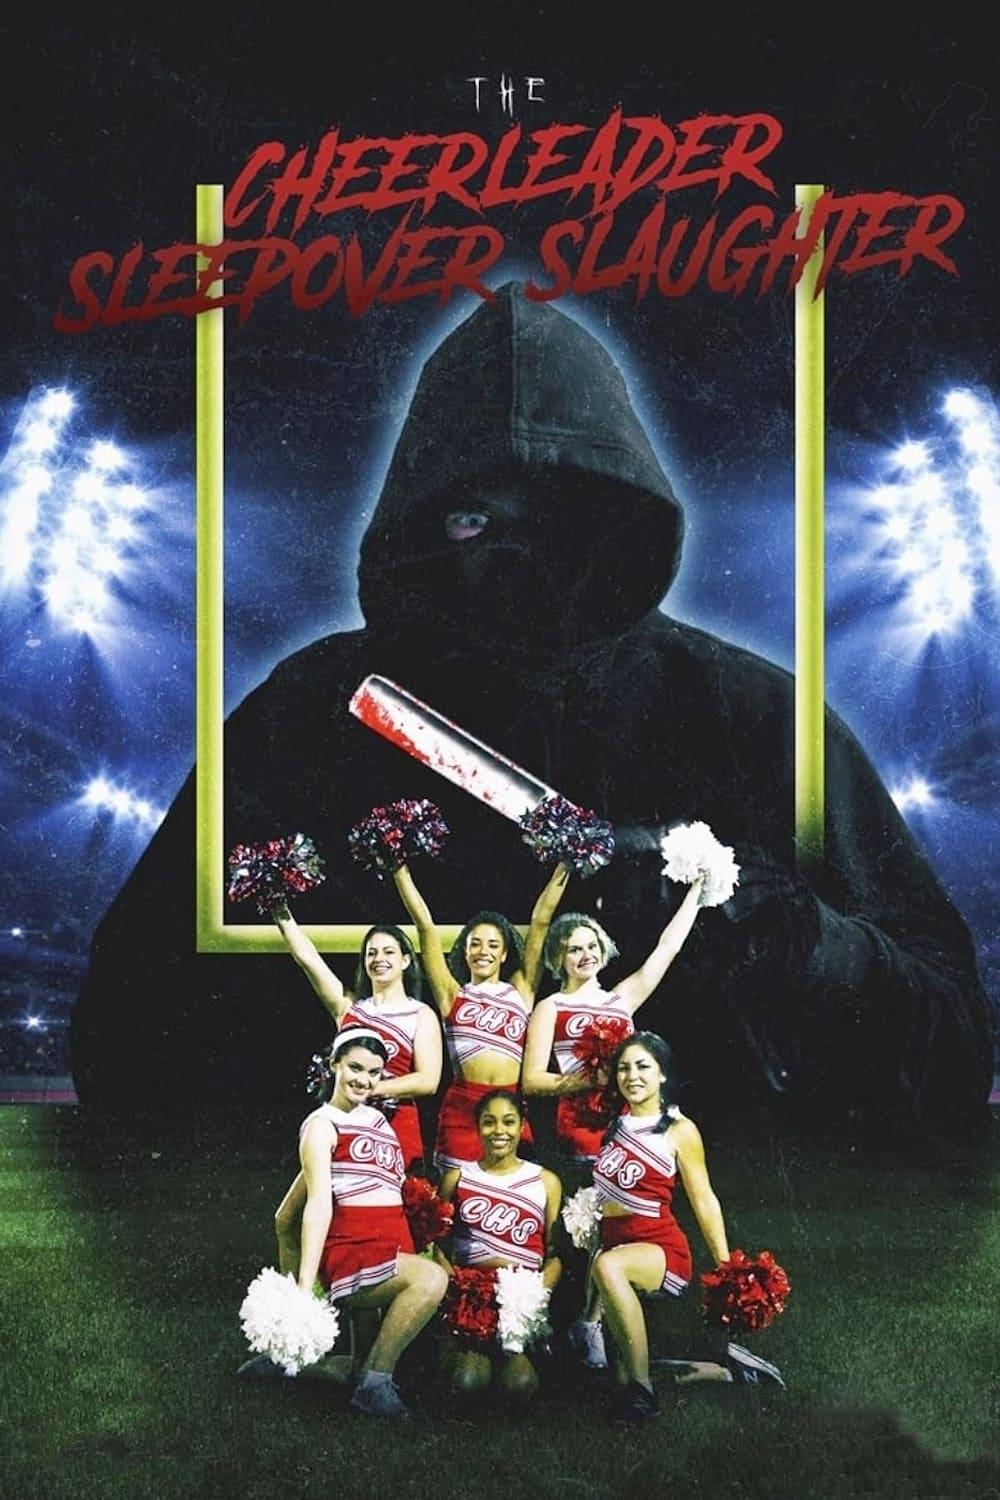 The Cheerleader Sleepover Slaughter poster